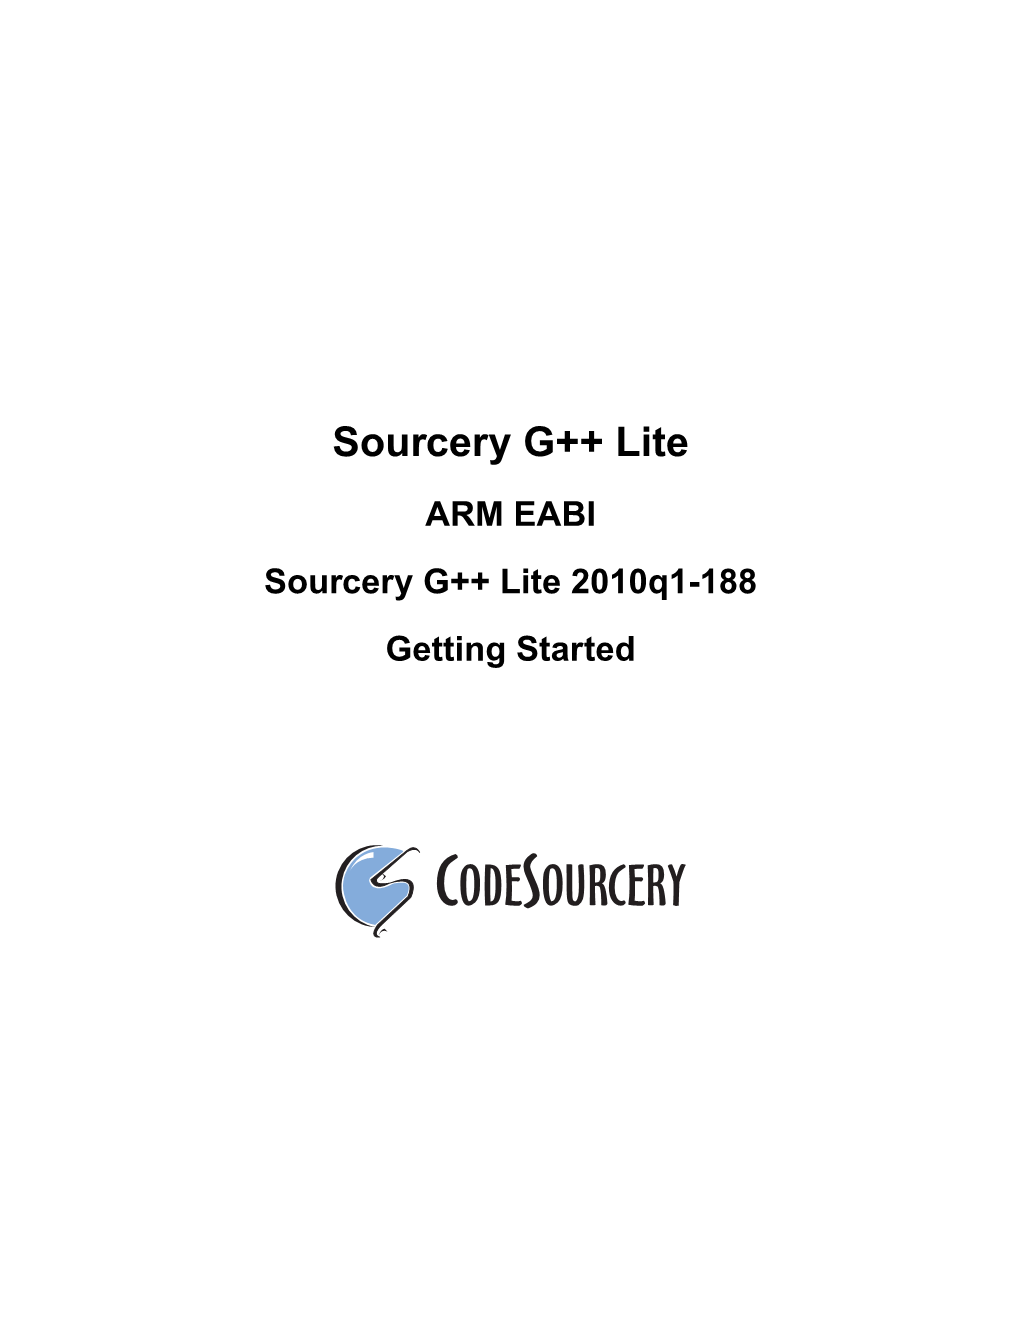 ARM EABI Sourcery G++ Lite 2010Q1-188 Getting Started Sourcery G++ Lite: ARM EABI: Sourcery G++ Lite 2010Q1- 188: Getting Started Codesourcery, Inc